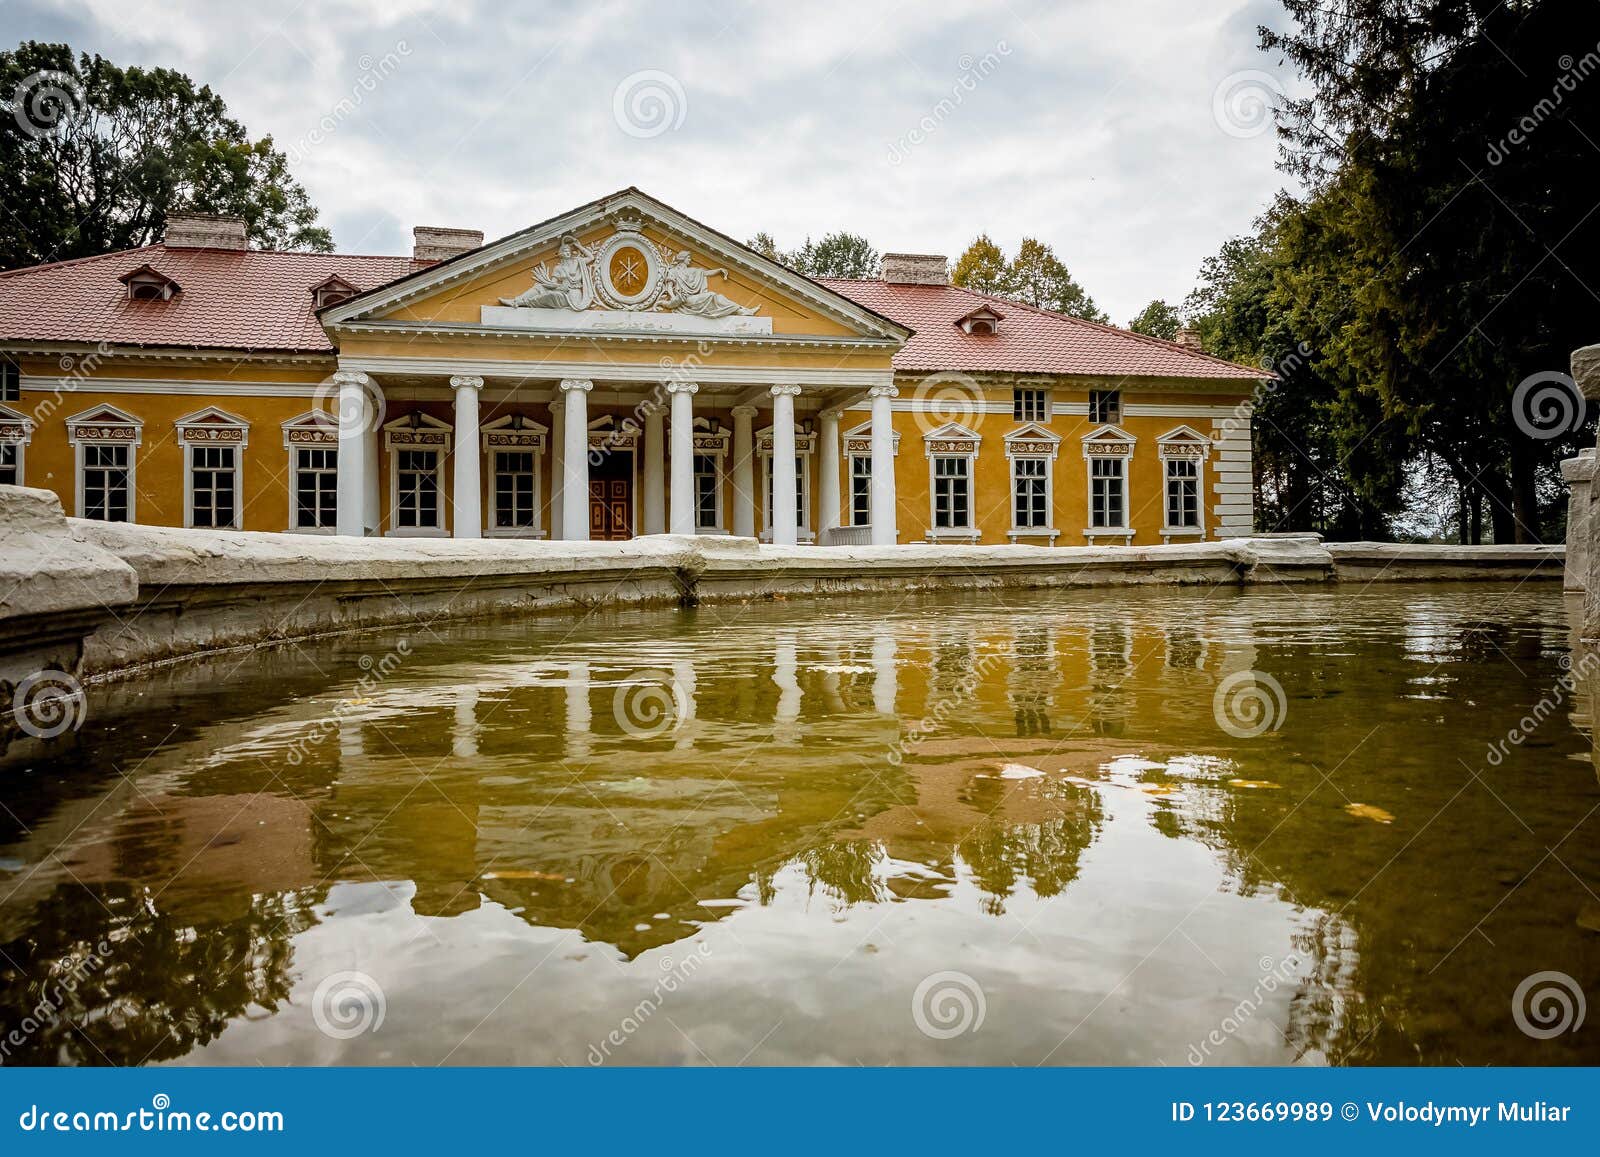 manor in the village samchiky starokostyantinivsky raion, ukraine. building in the style of classicism. reflection